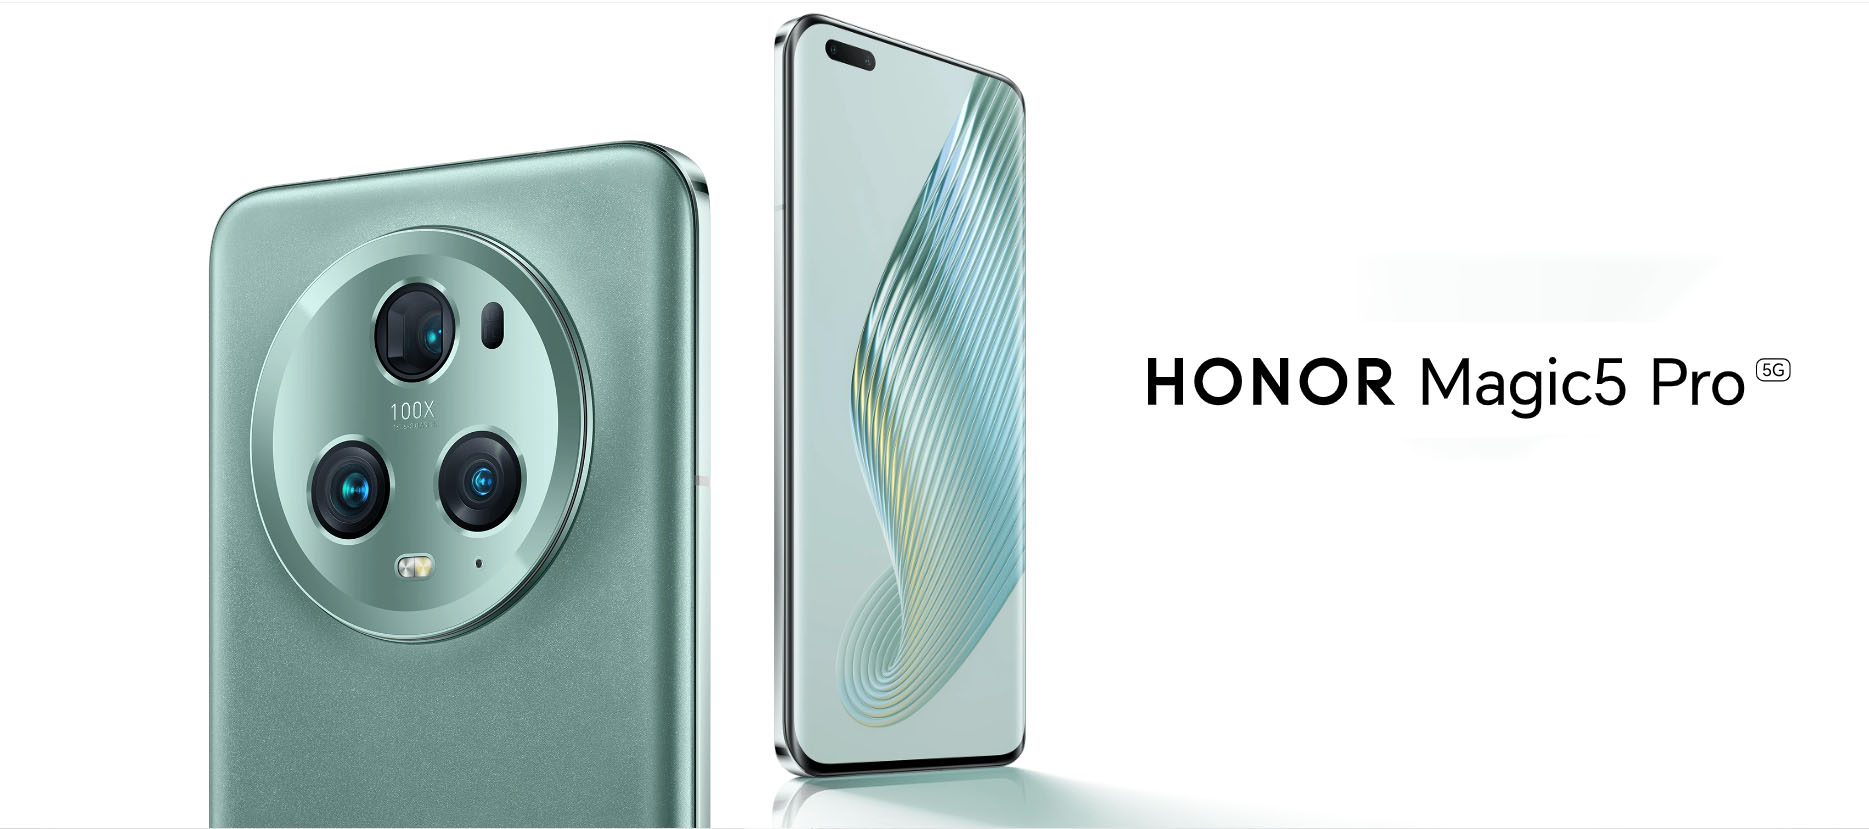 Honor Magic5 Pro in Nepal: The legendary Antoni Gaudí-inspired smartphone design